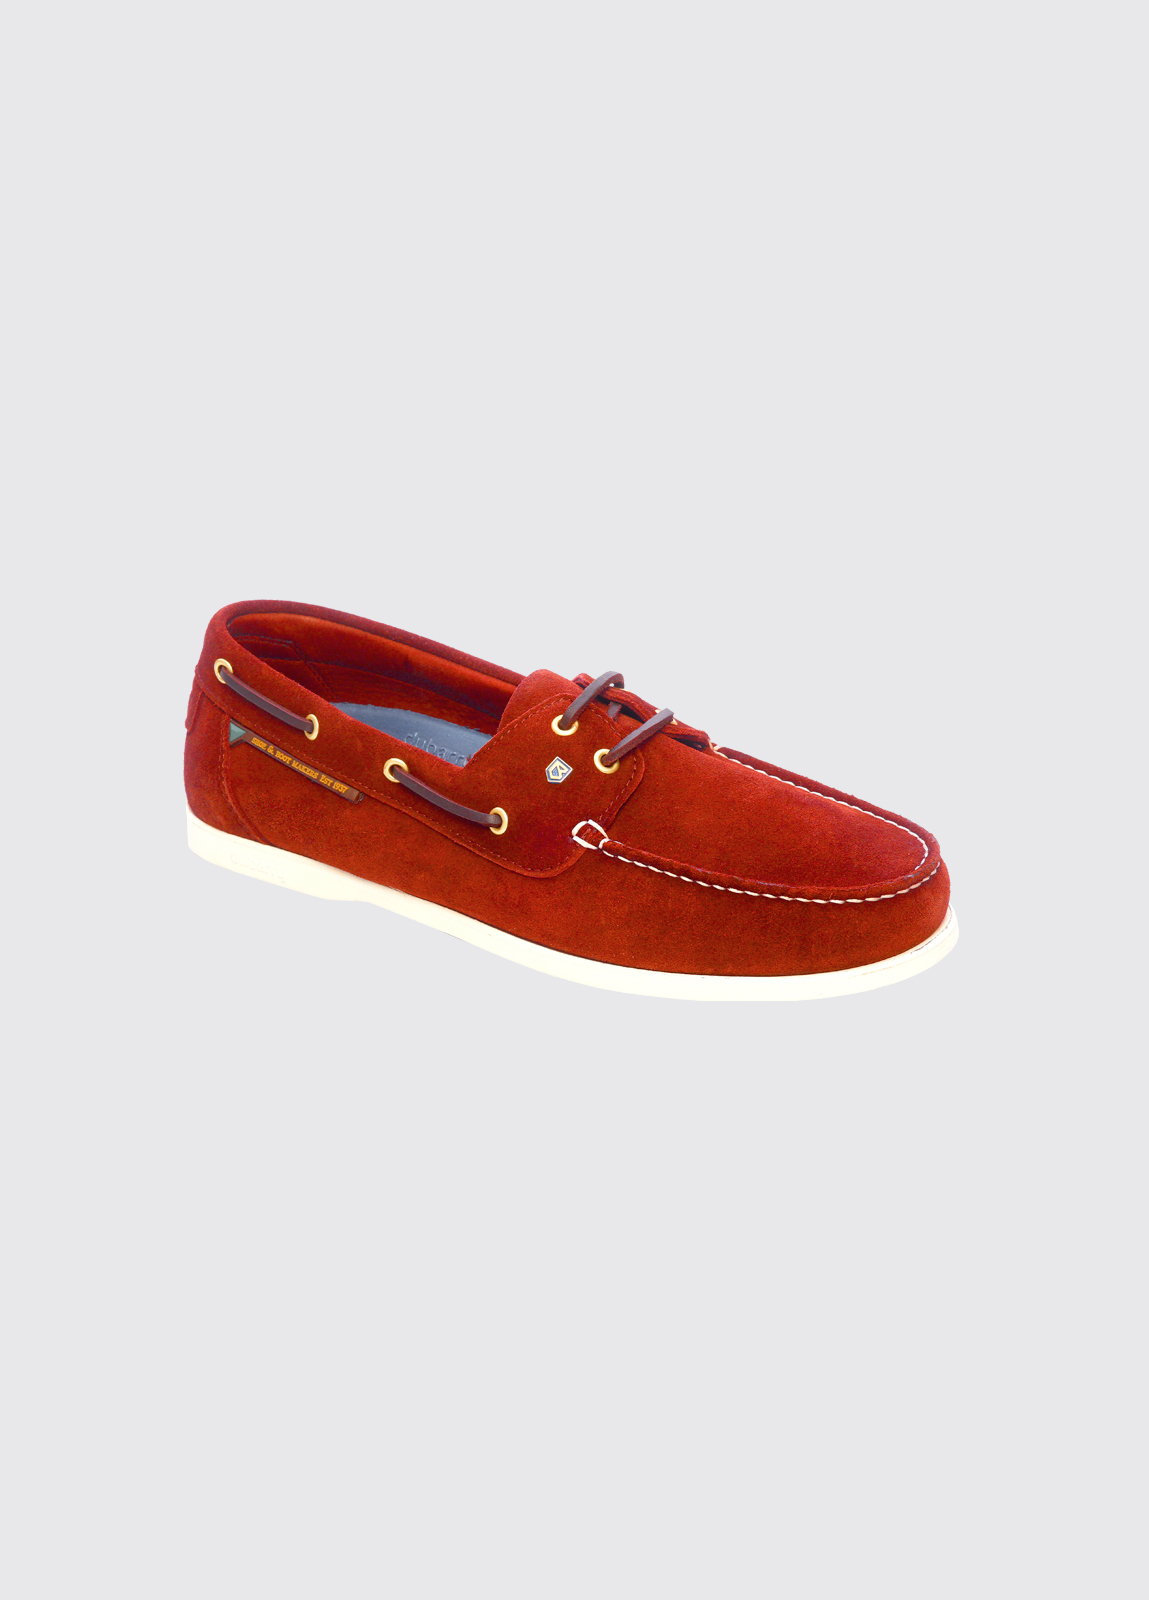 Windward Mens Deck Shoe - Red